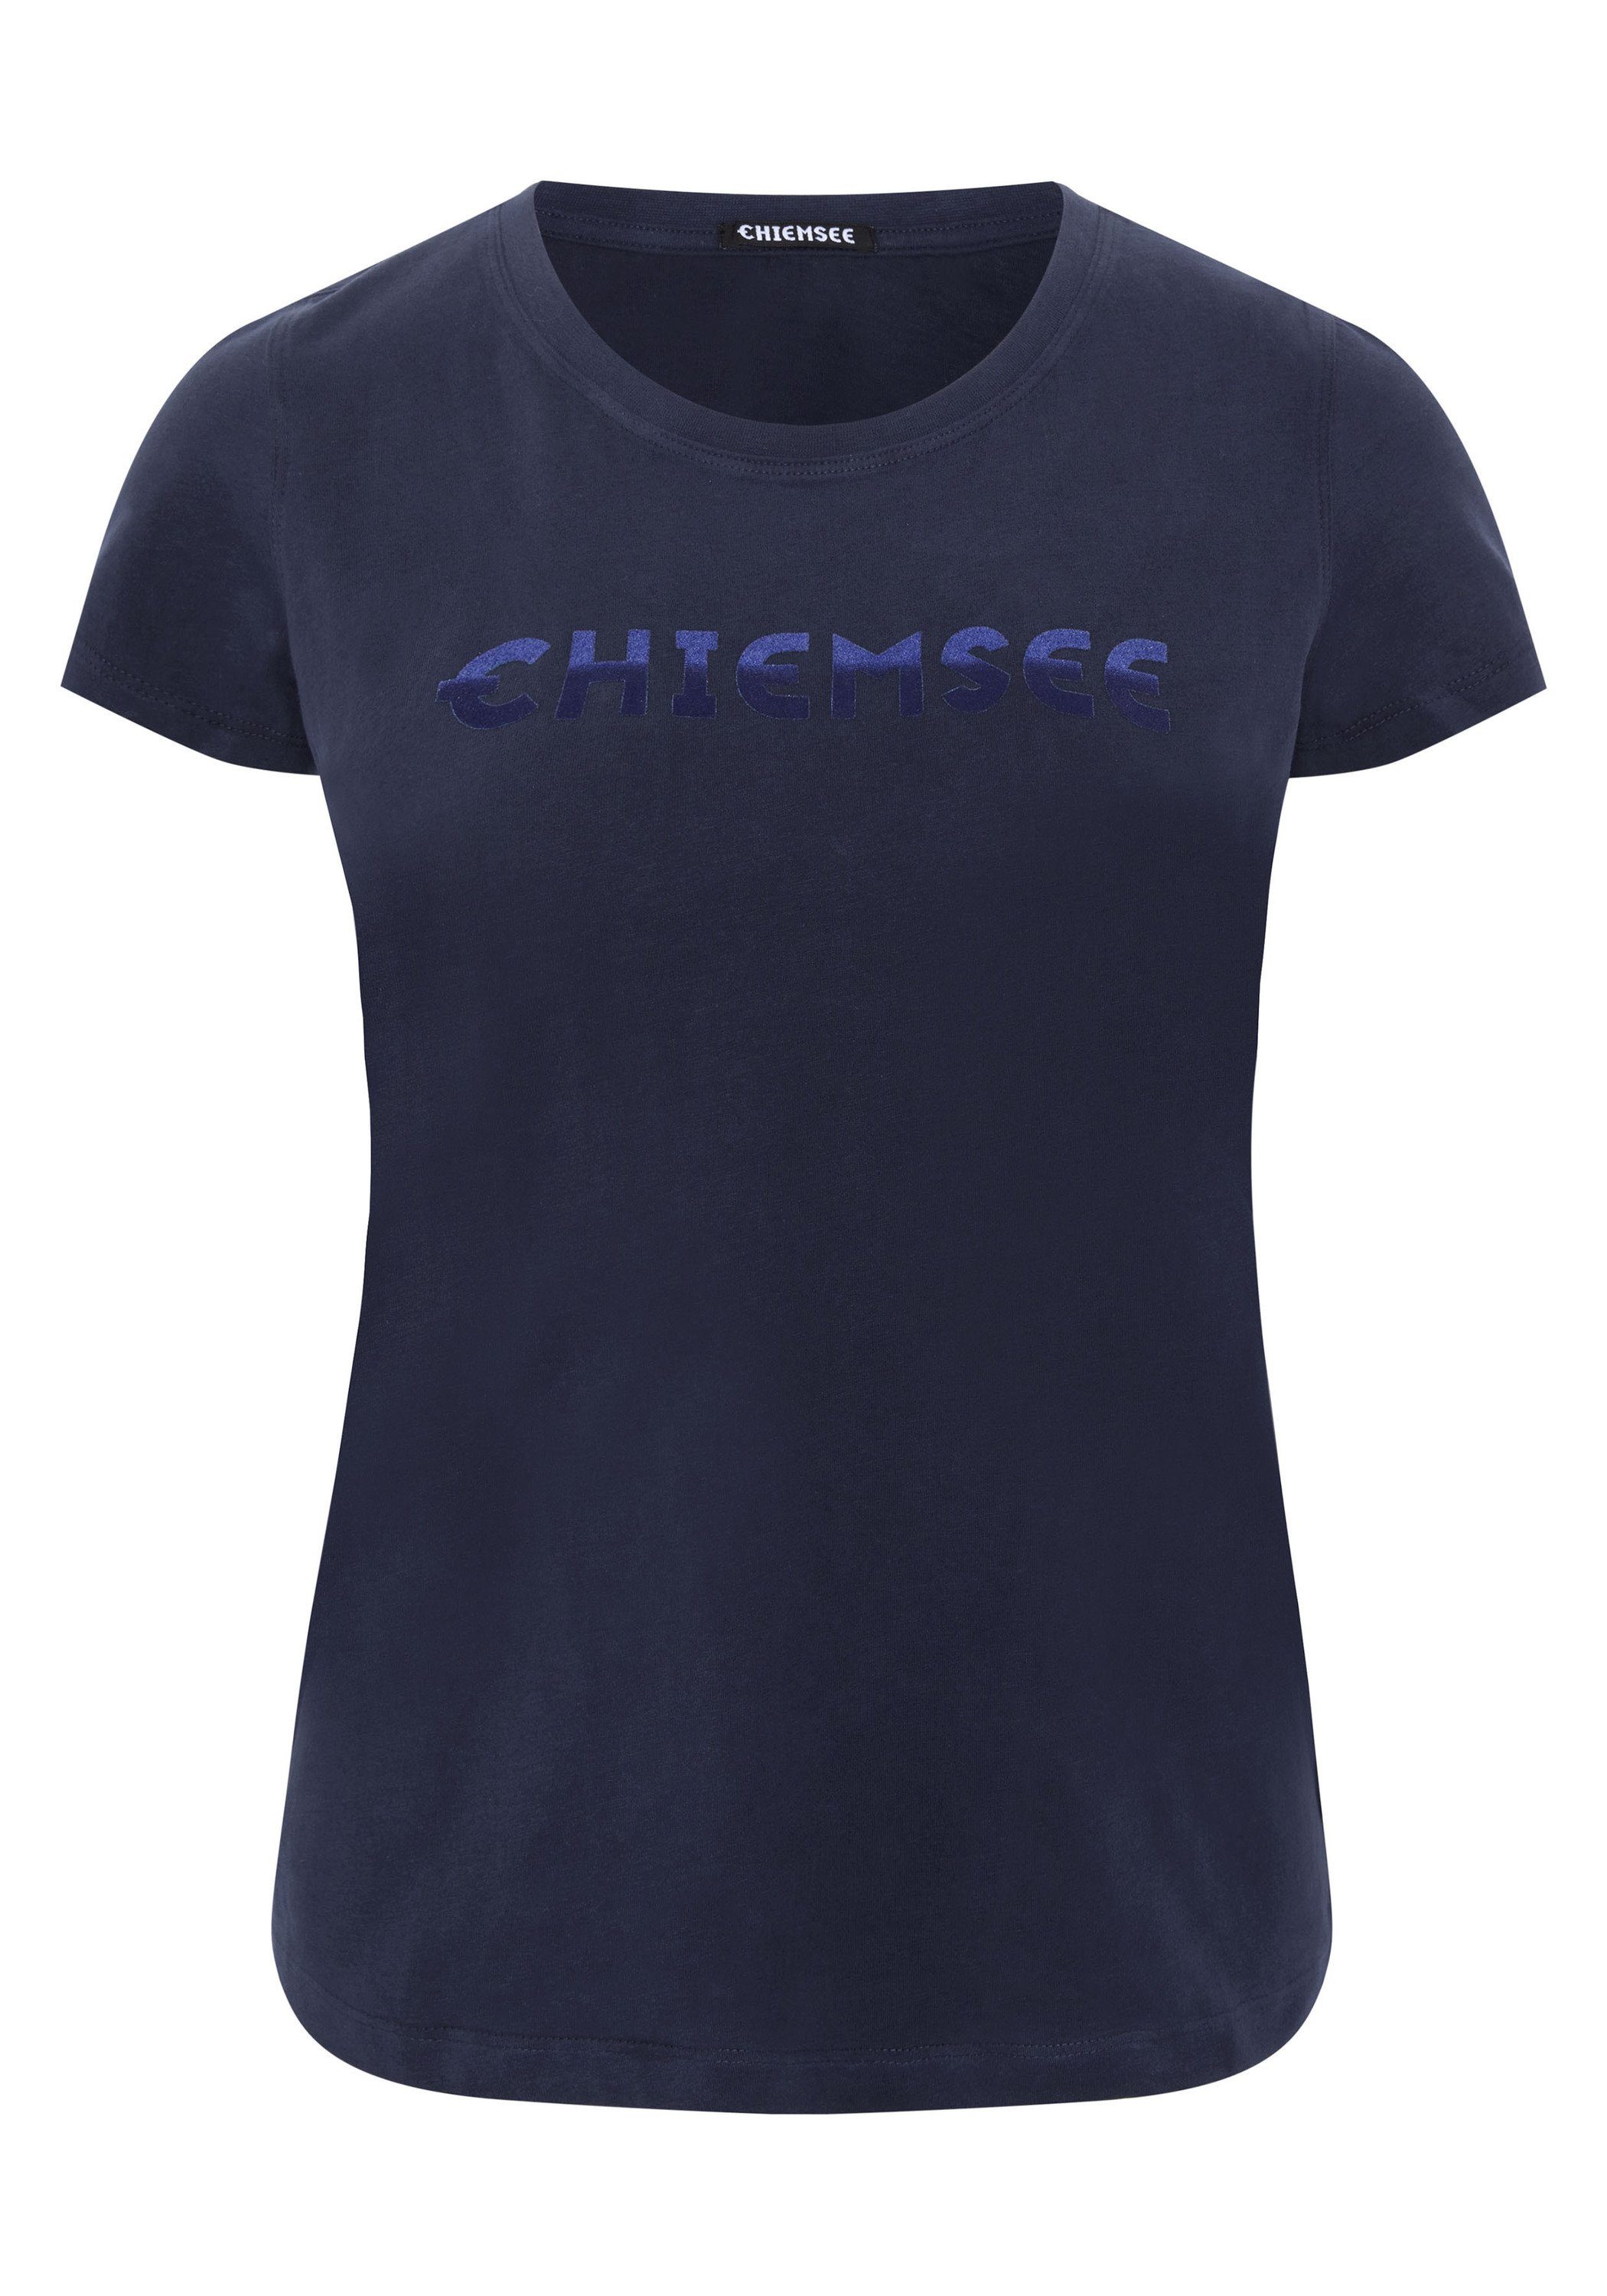 Chiemsee Print-Shirt T-Shirt mit Logo in Farbverlauf-Optik 1 Night Sky